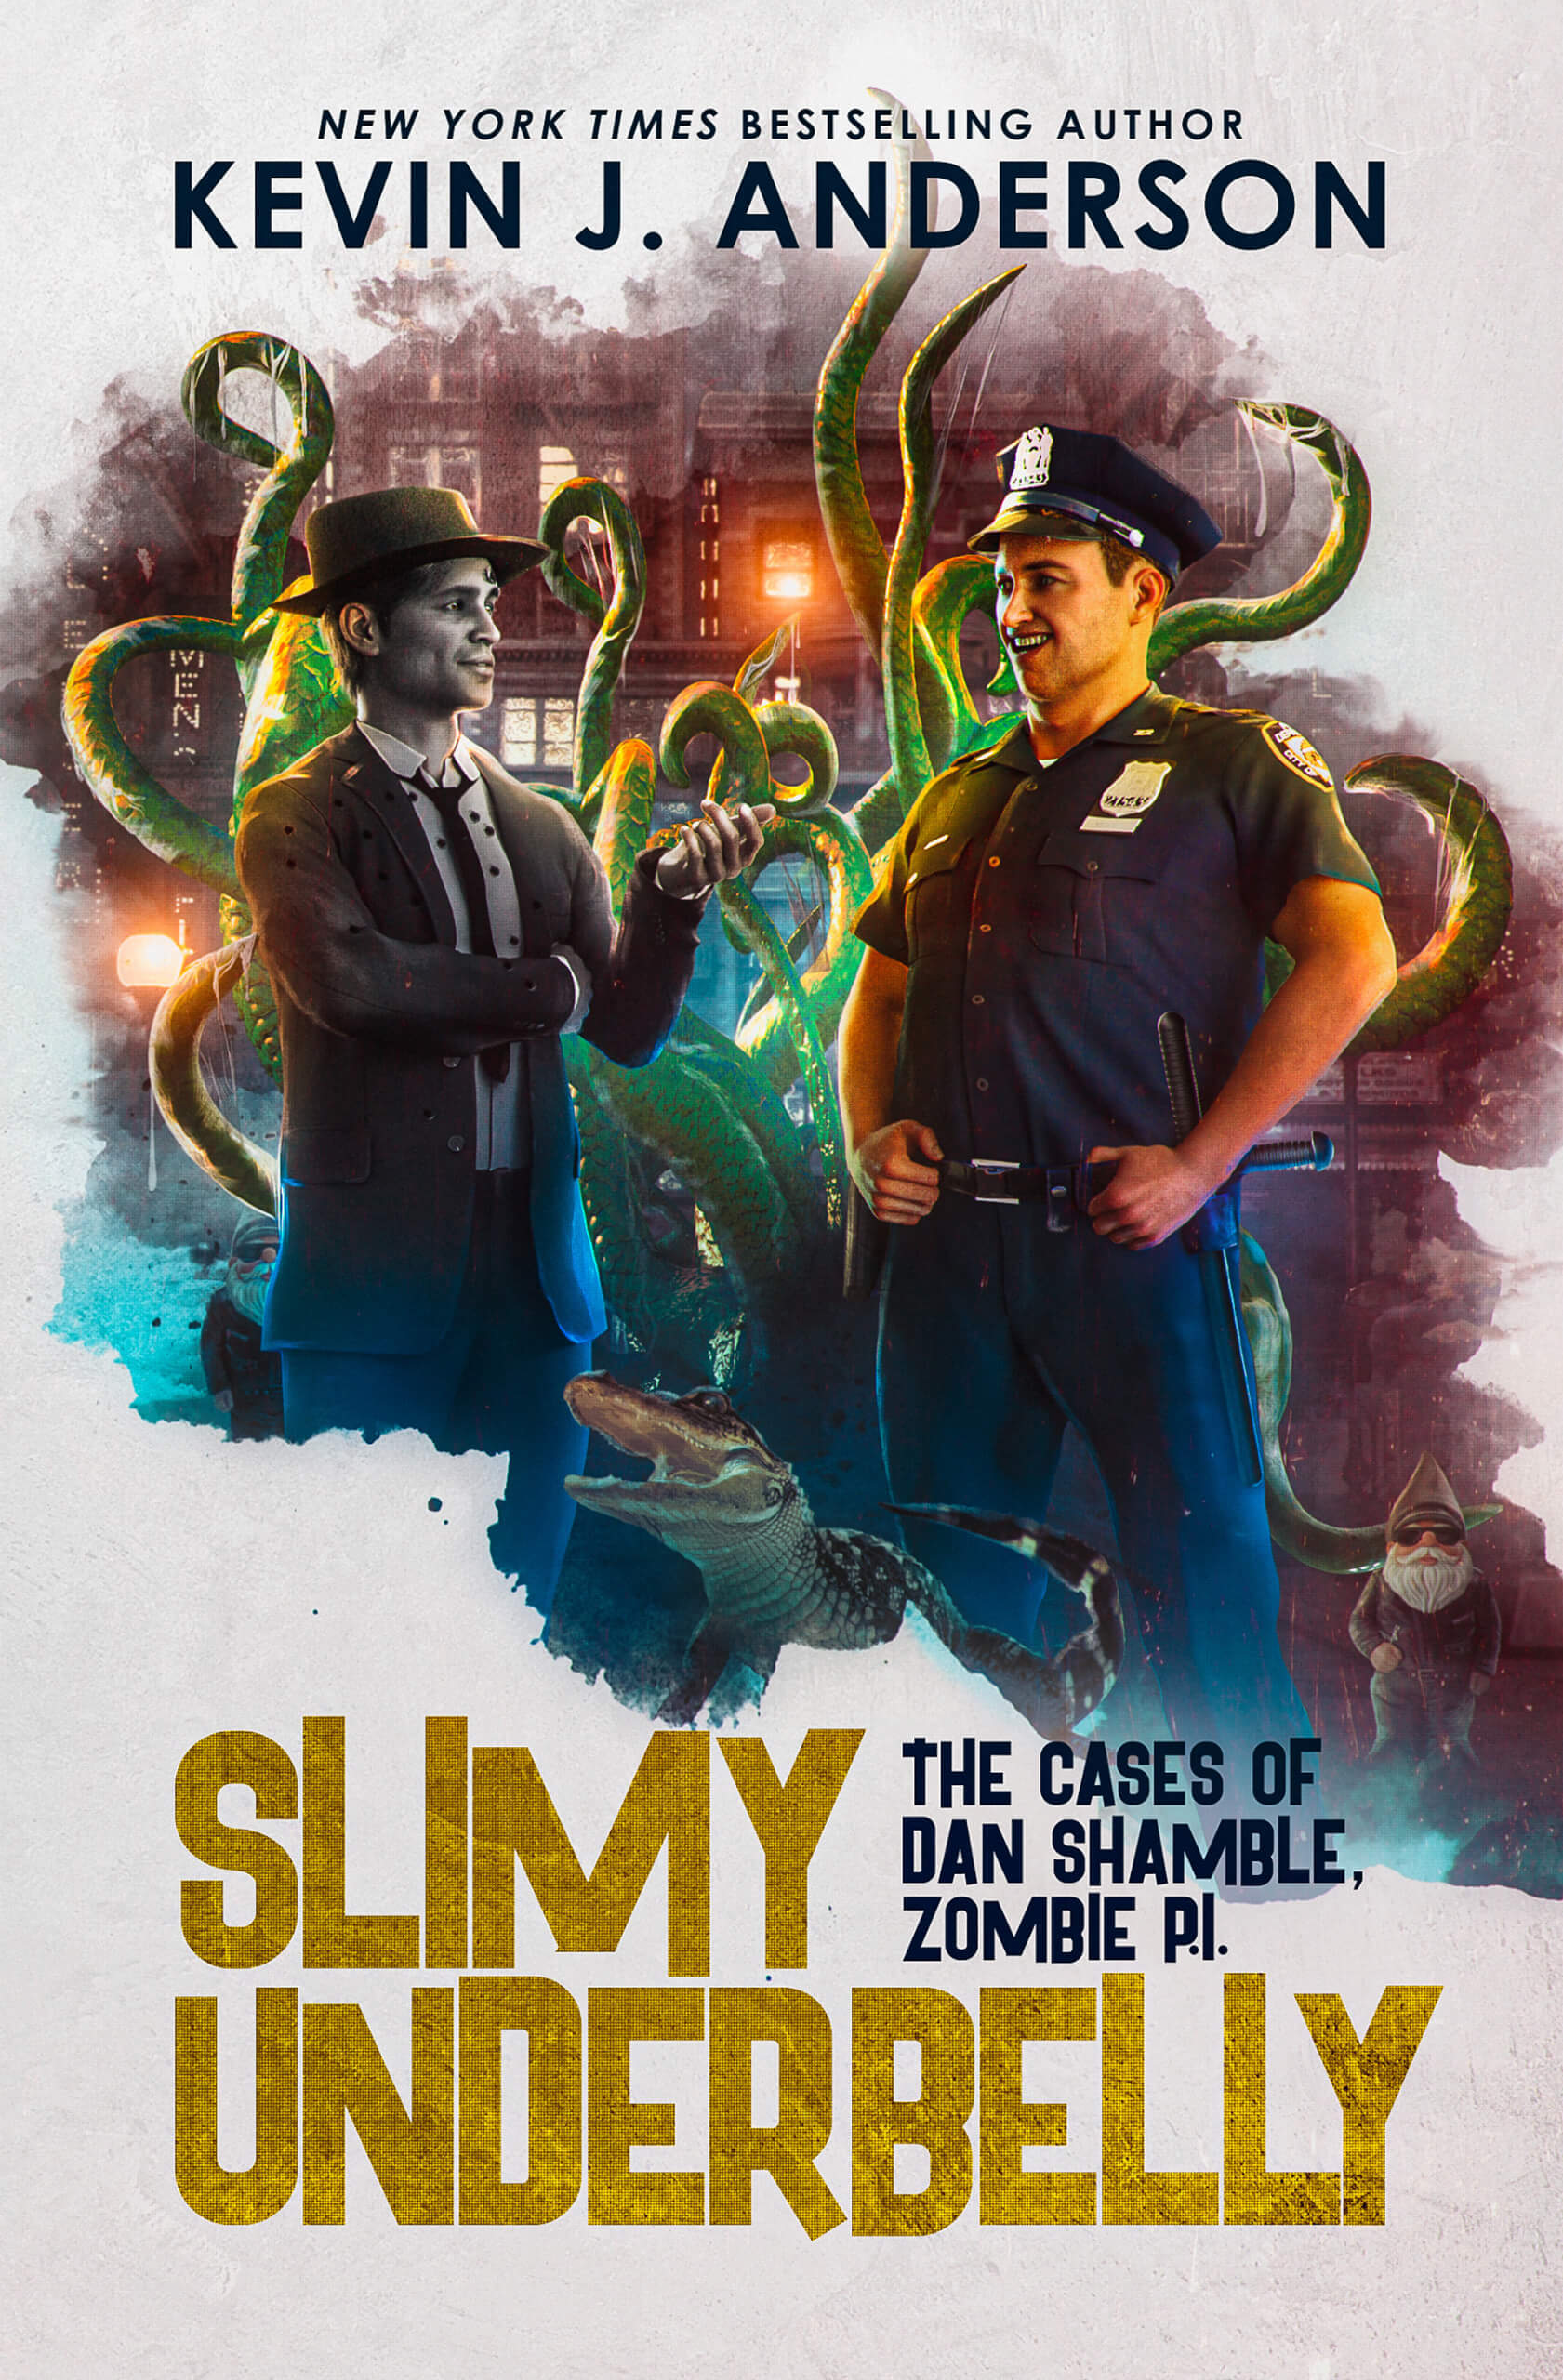 Dan Shamble, Zombie PI: Slimy Underbelly